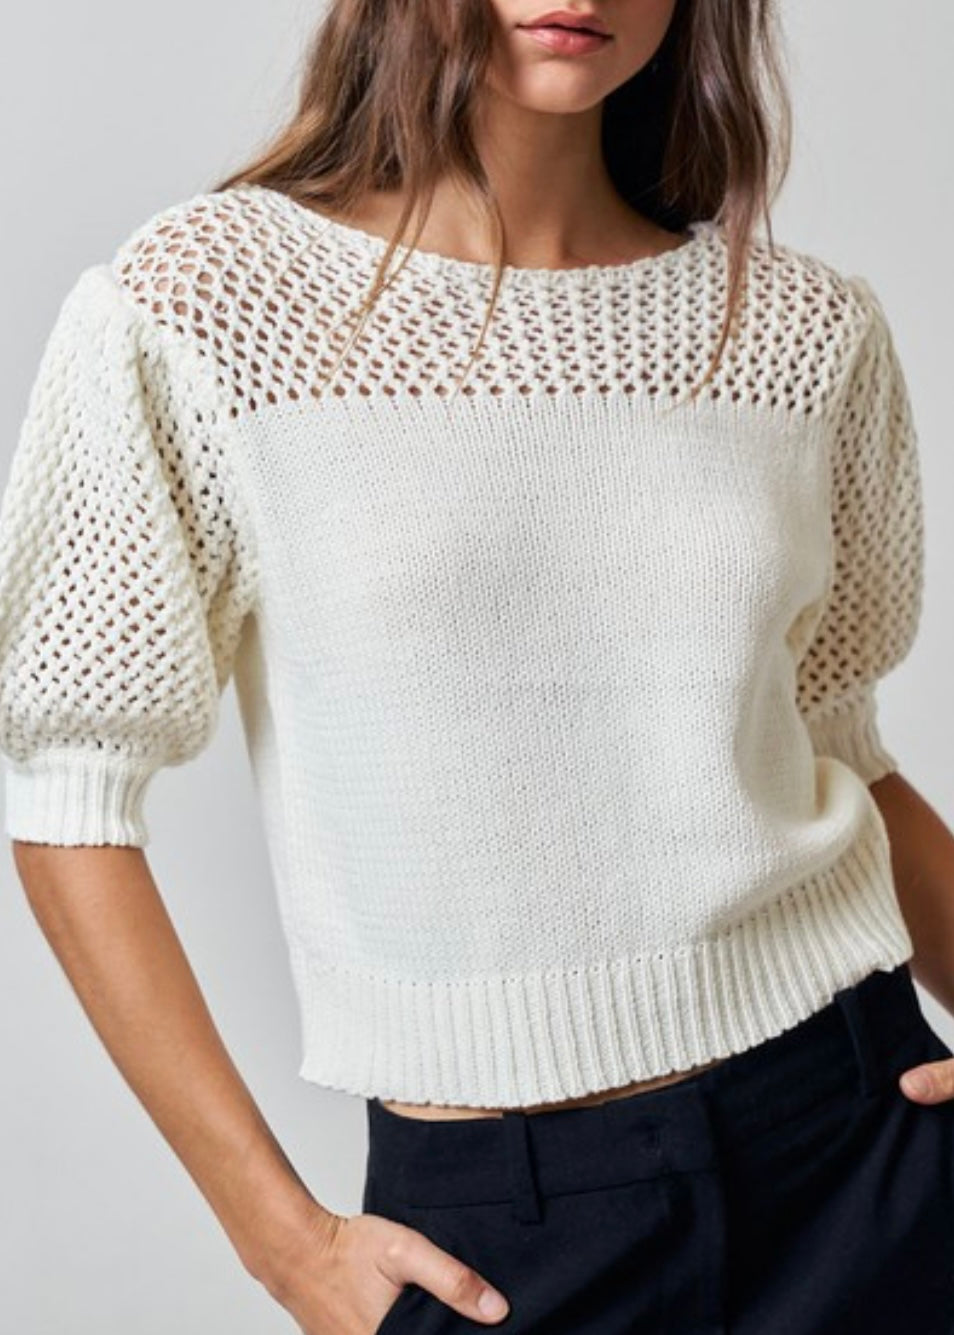 White Crochet Puff Knit Sweater Top